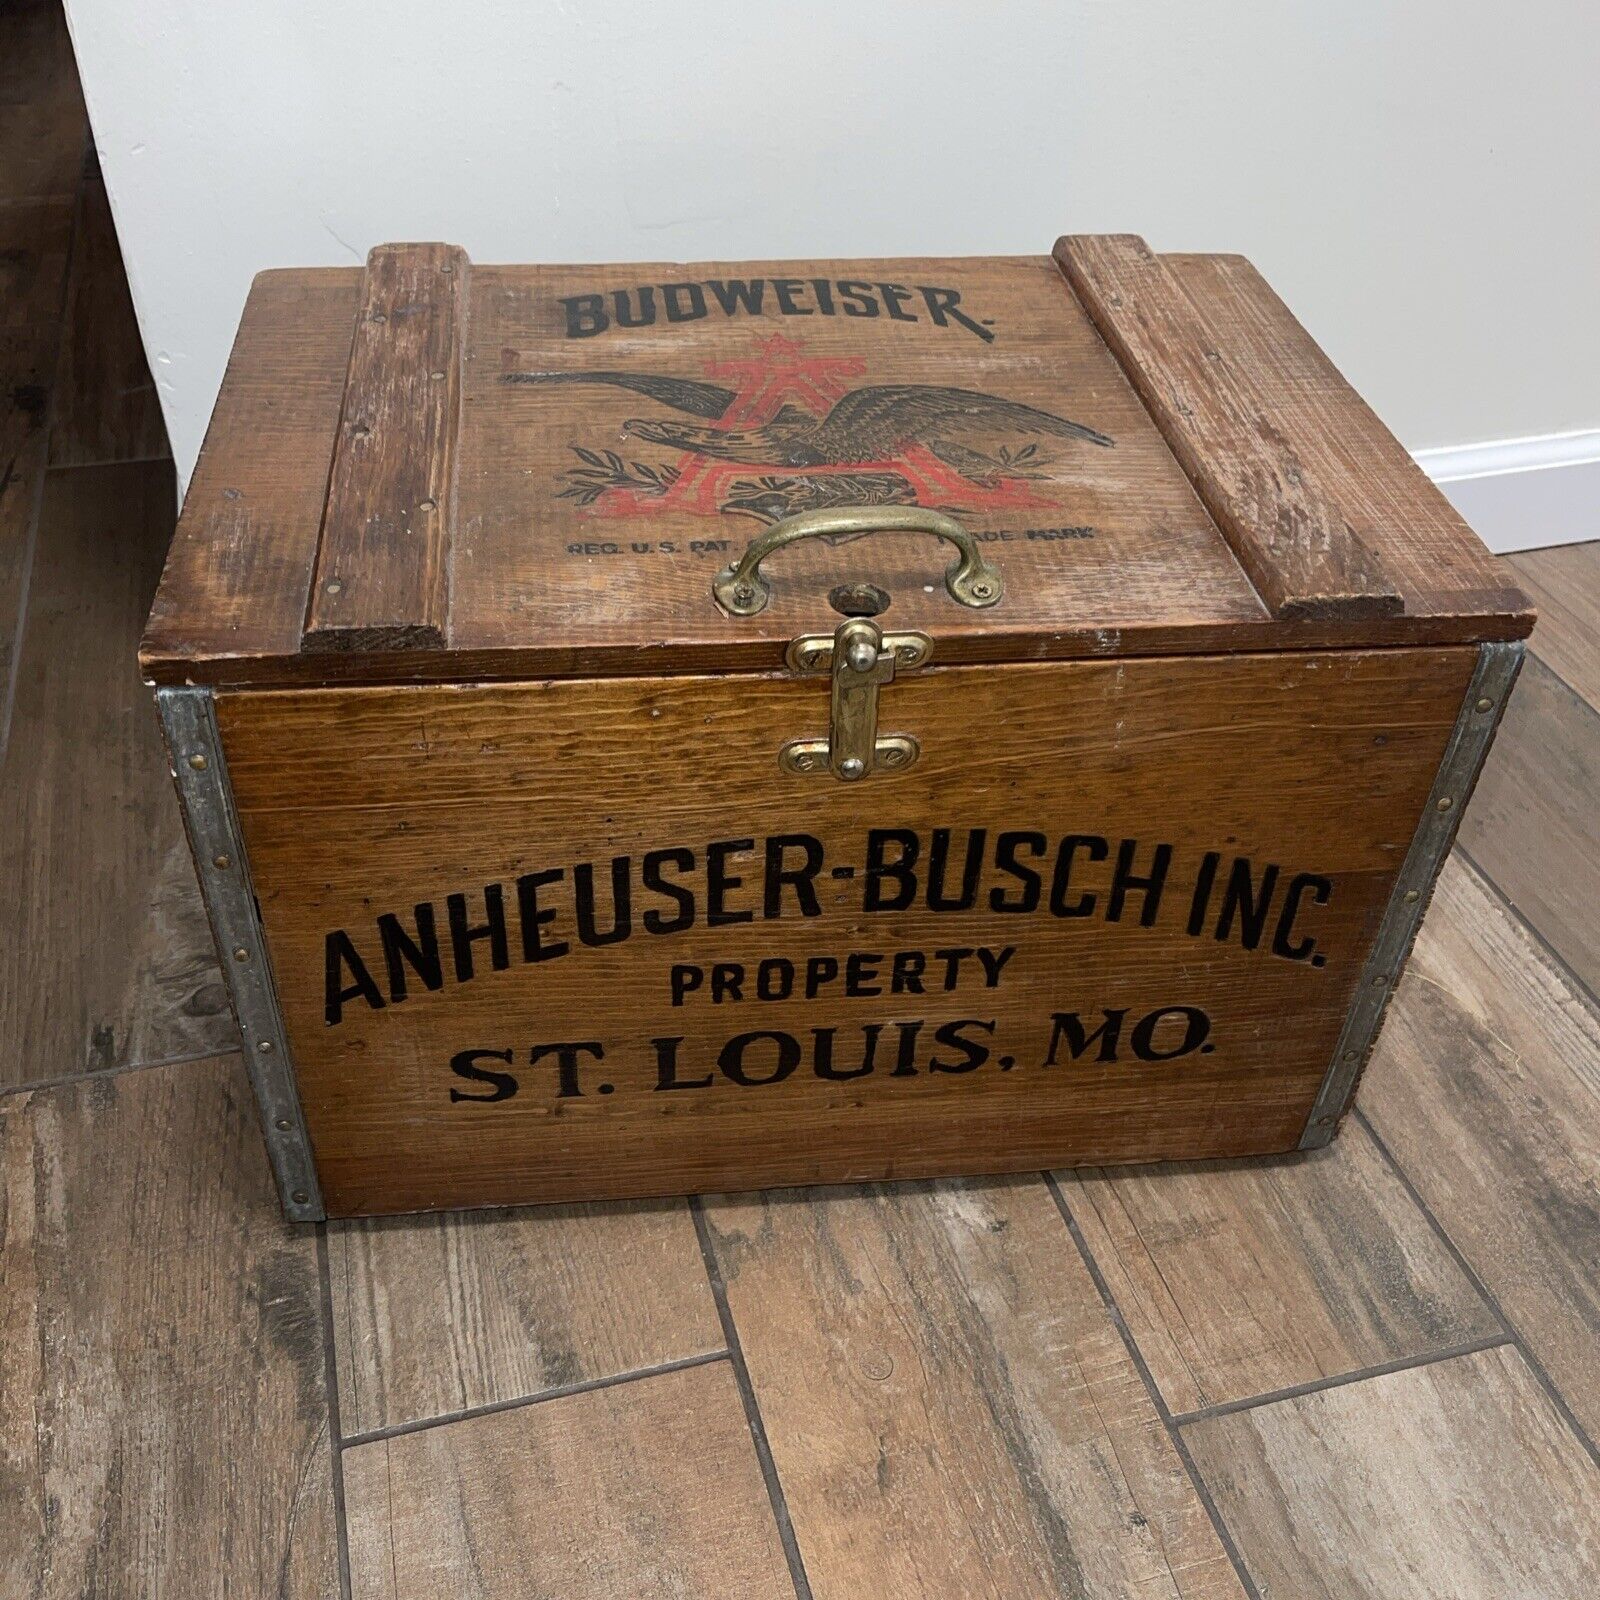 Vintage BUDWEISER Beer ANHEUSER-BUSCH INC. Hinged Wood Box Advertising Crate